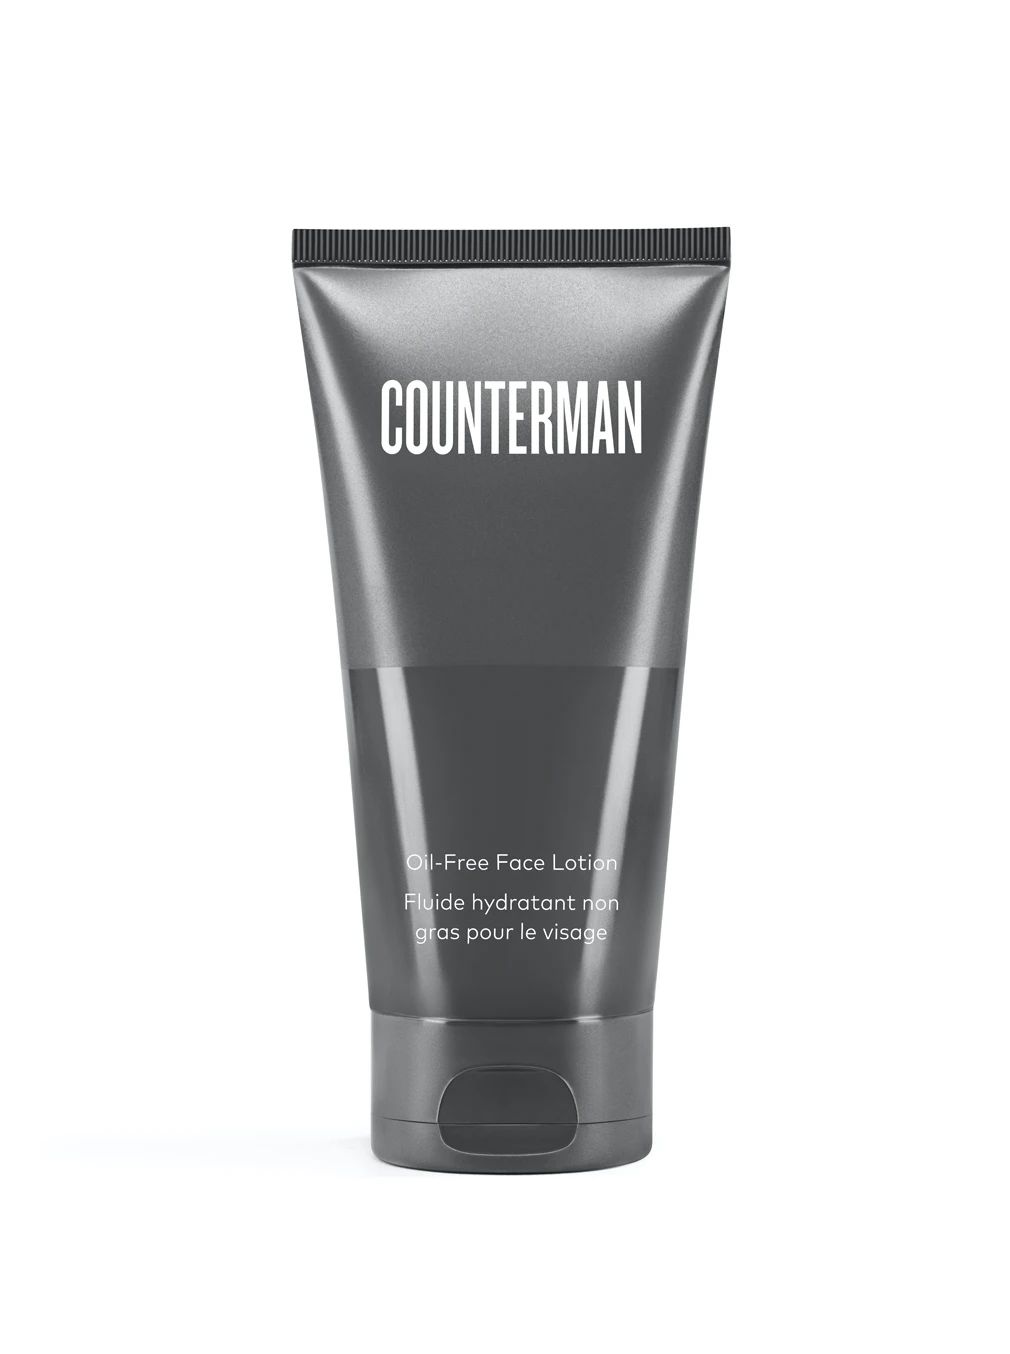 Counterman Oil-Free Face Lotion | Beautycounter.com